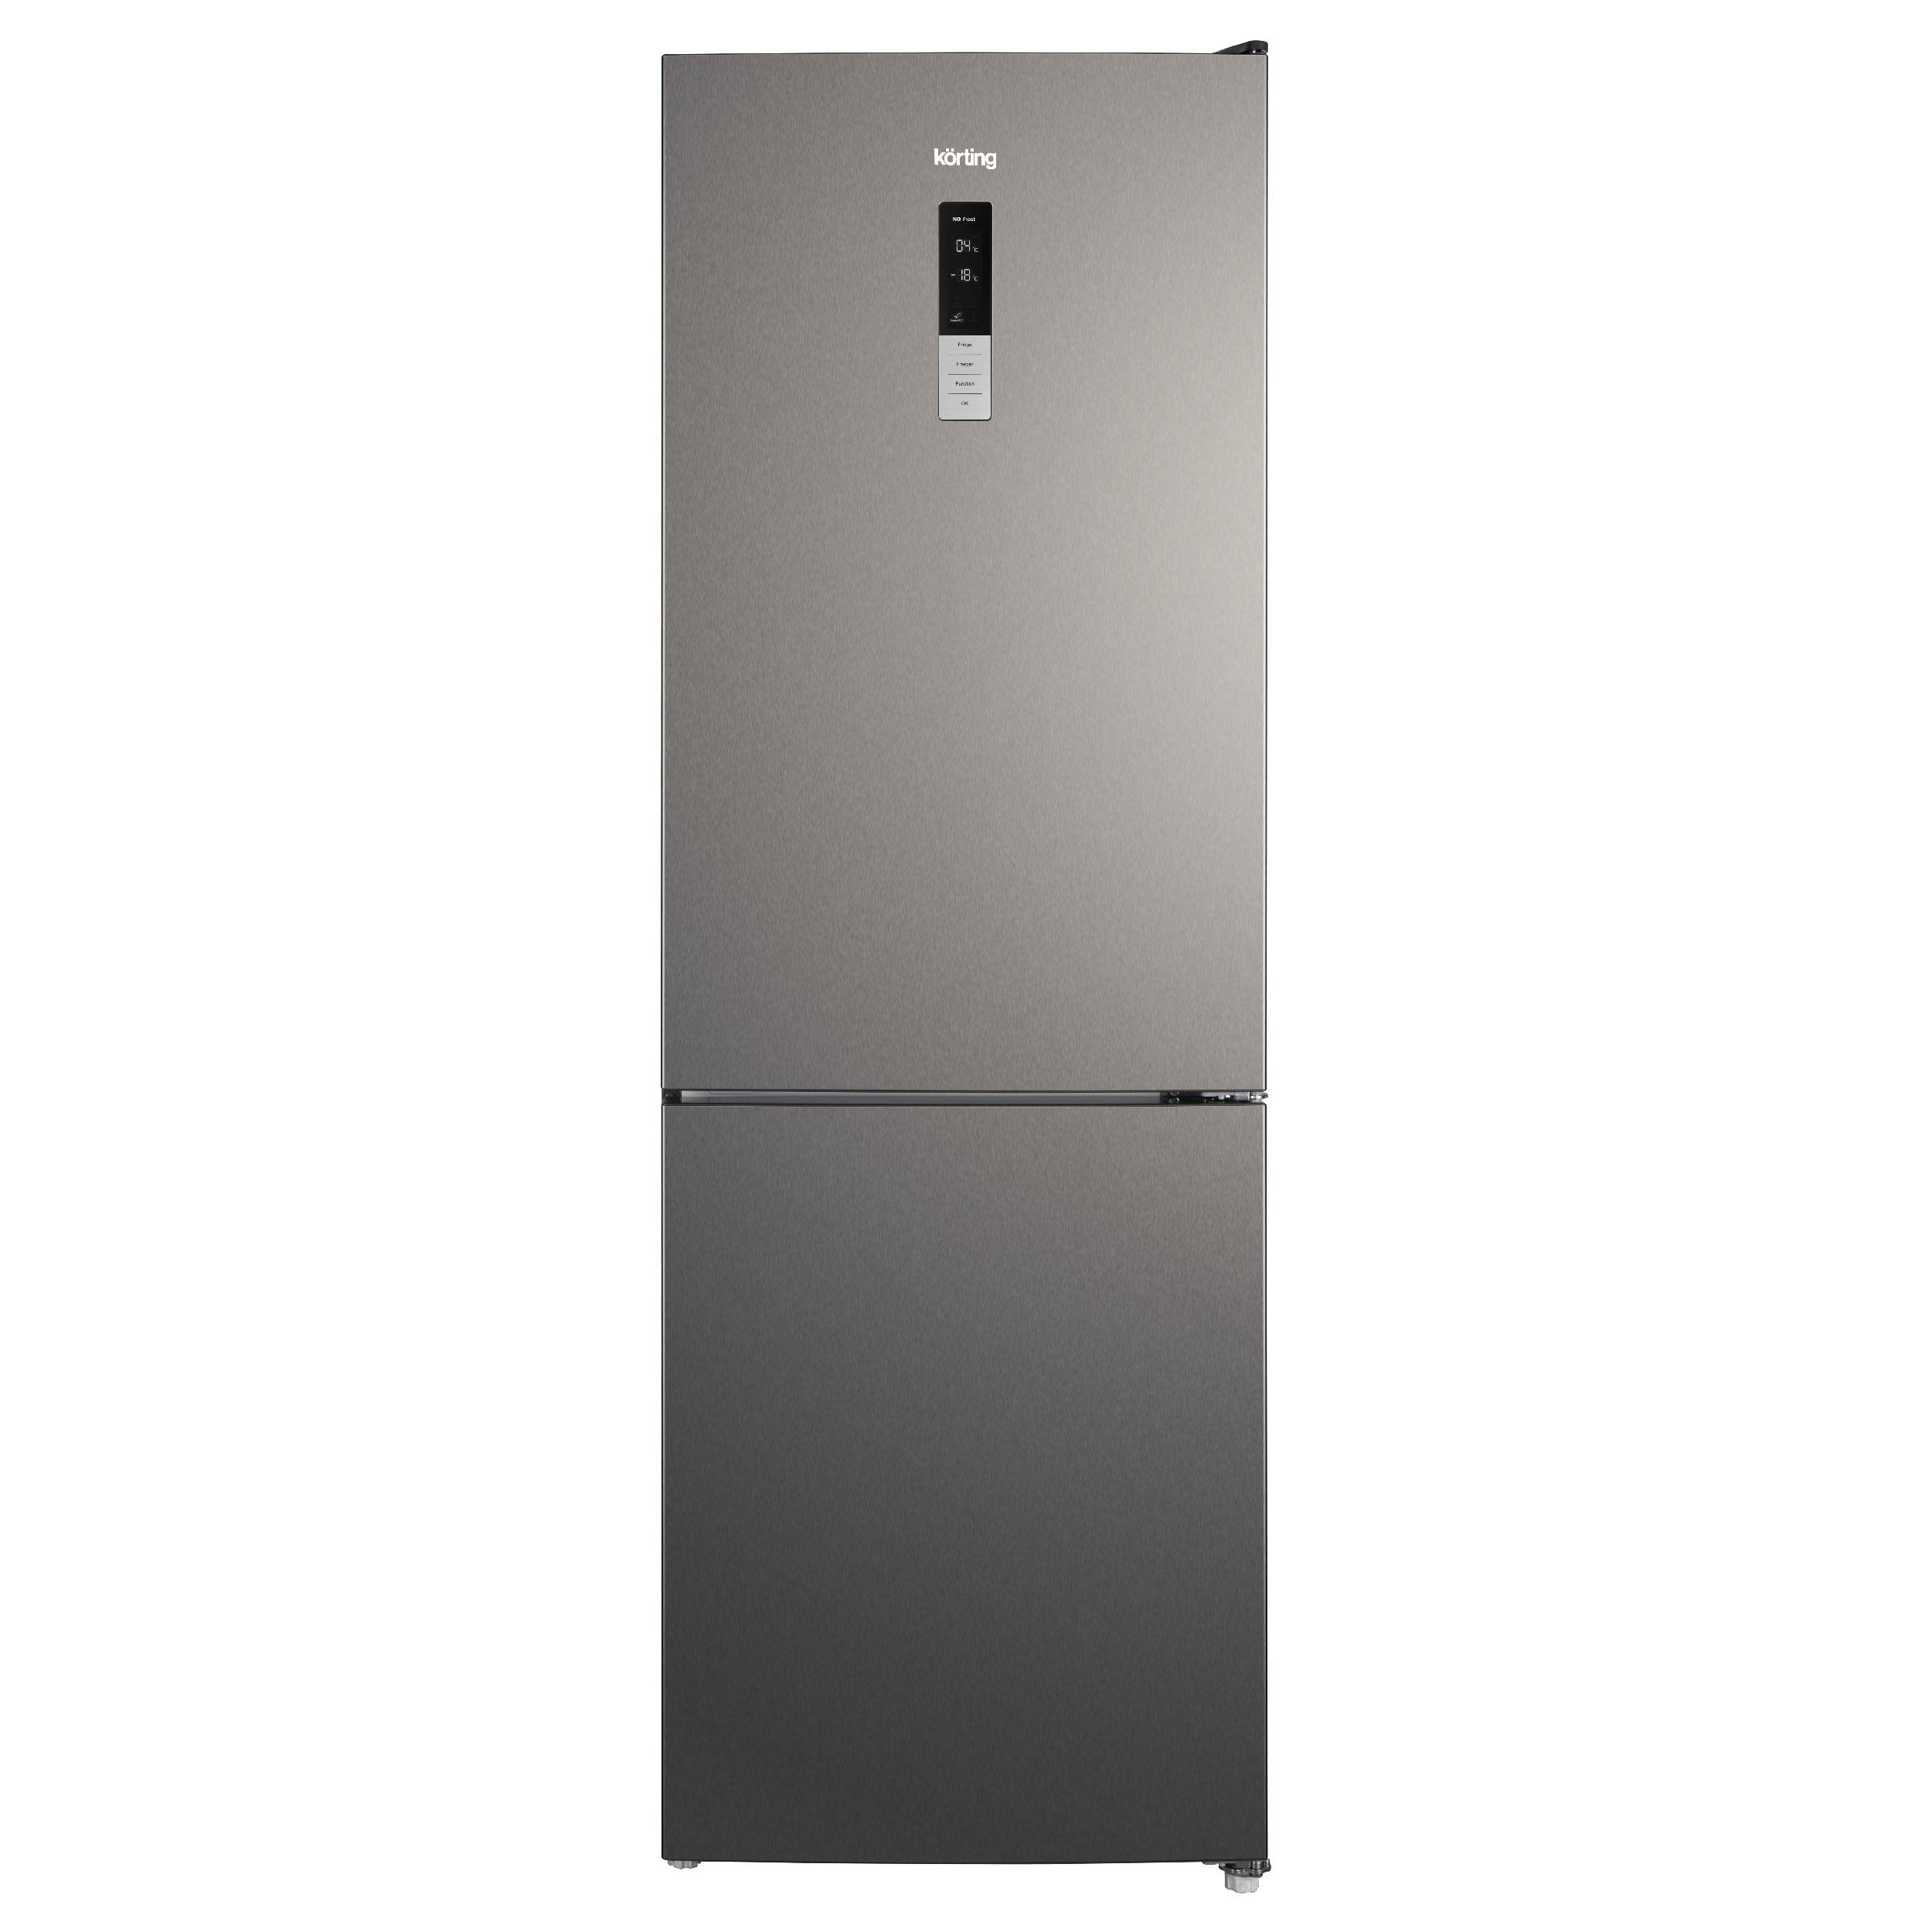 Холодильник Korting KNFC 61869 X серебристый, серый холодильник korting knfc 62980 x серебристый серый